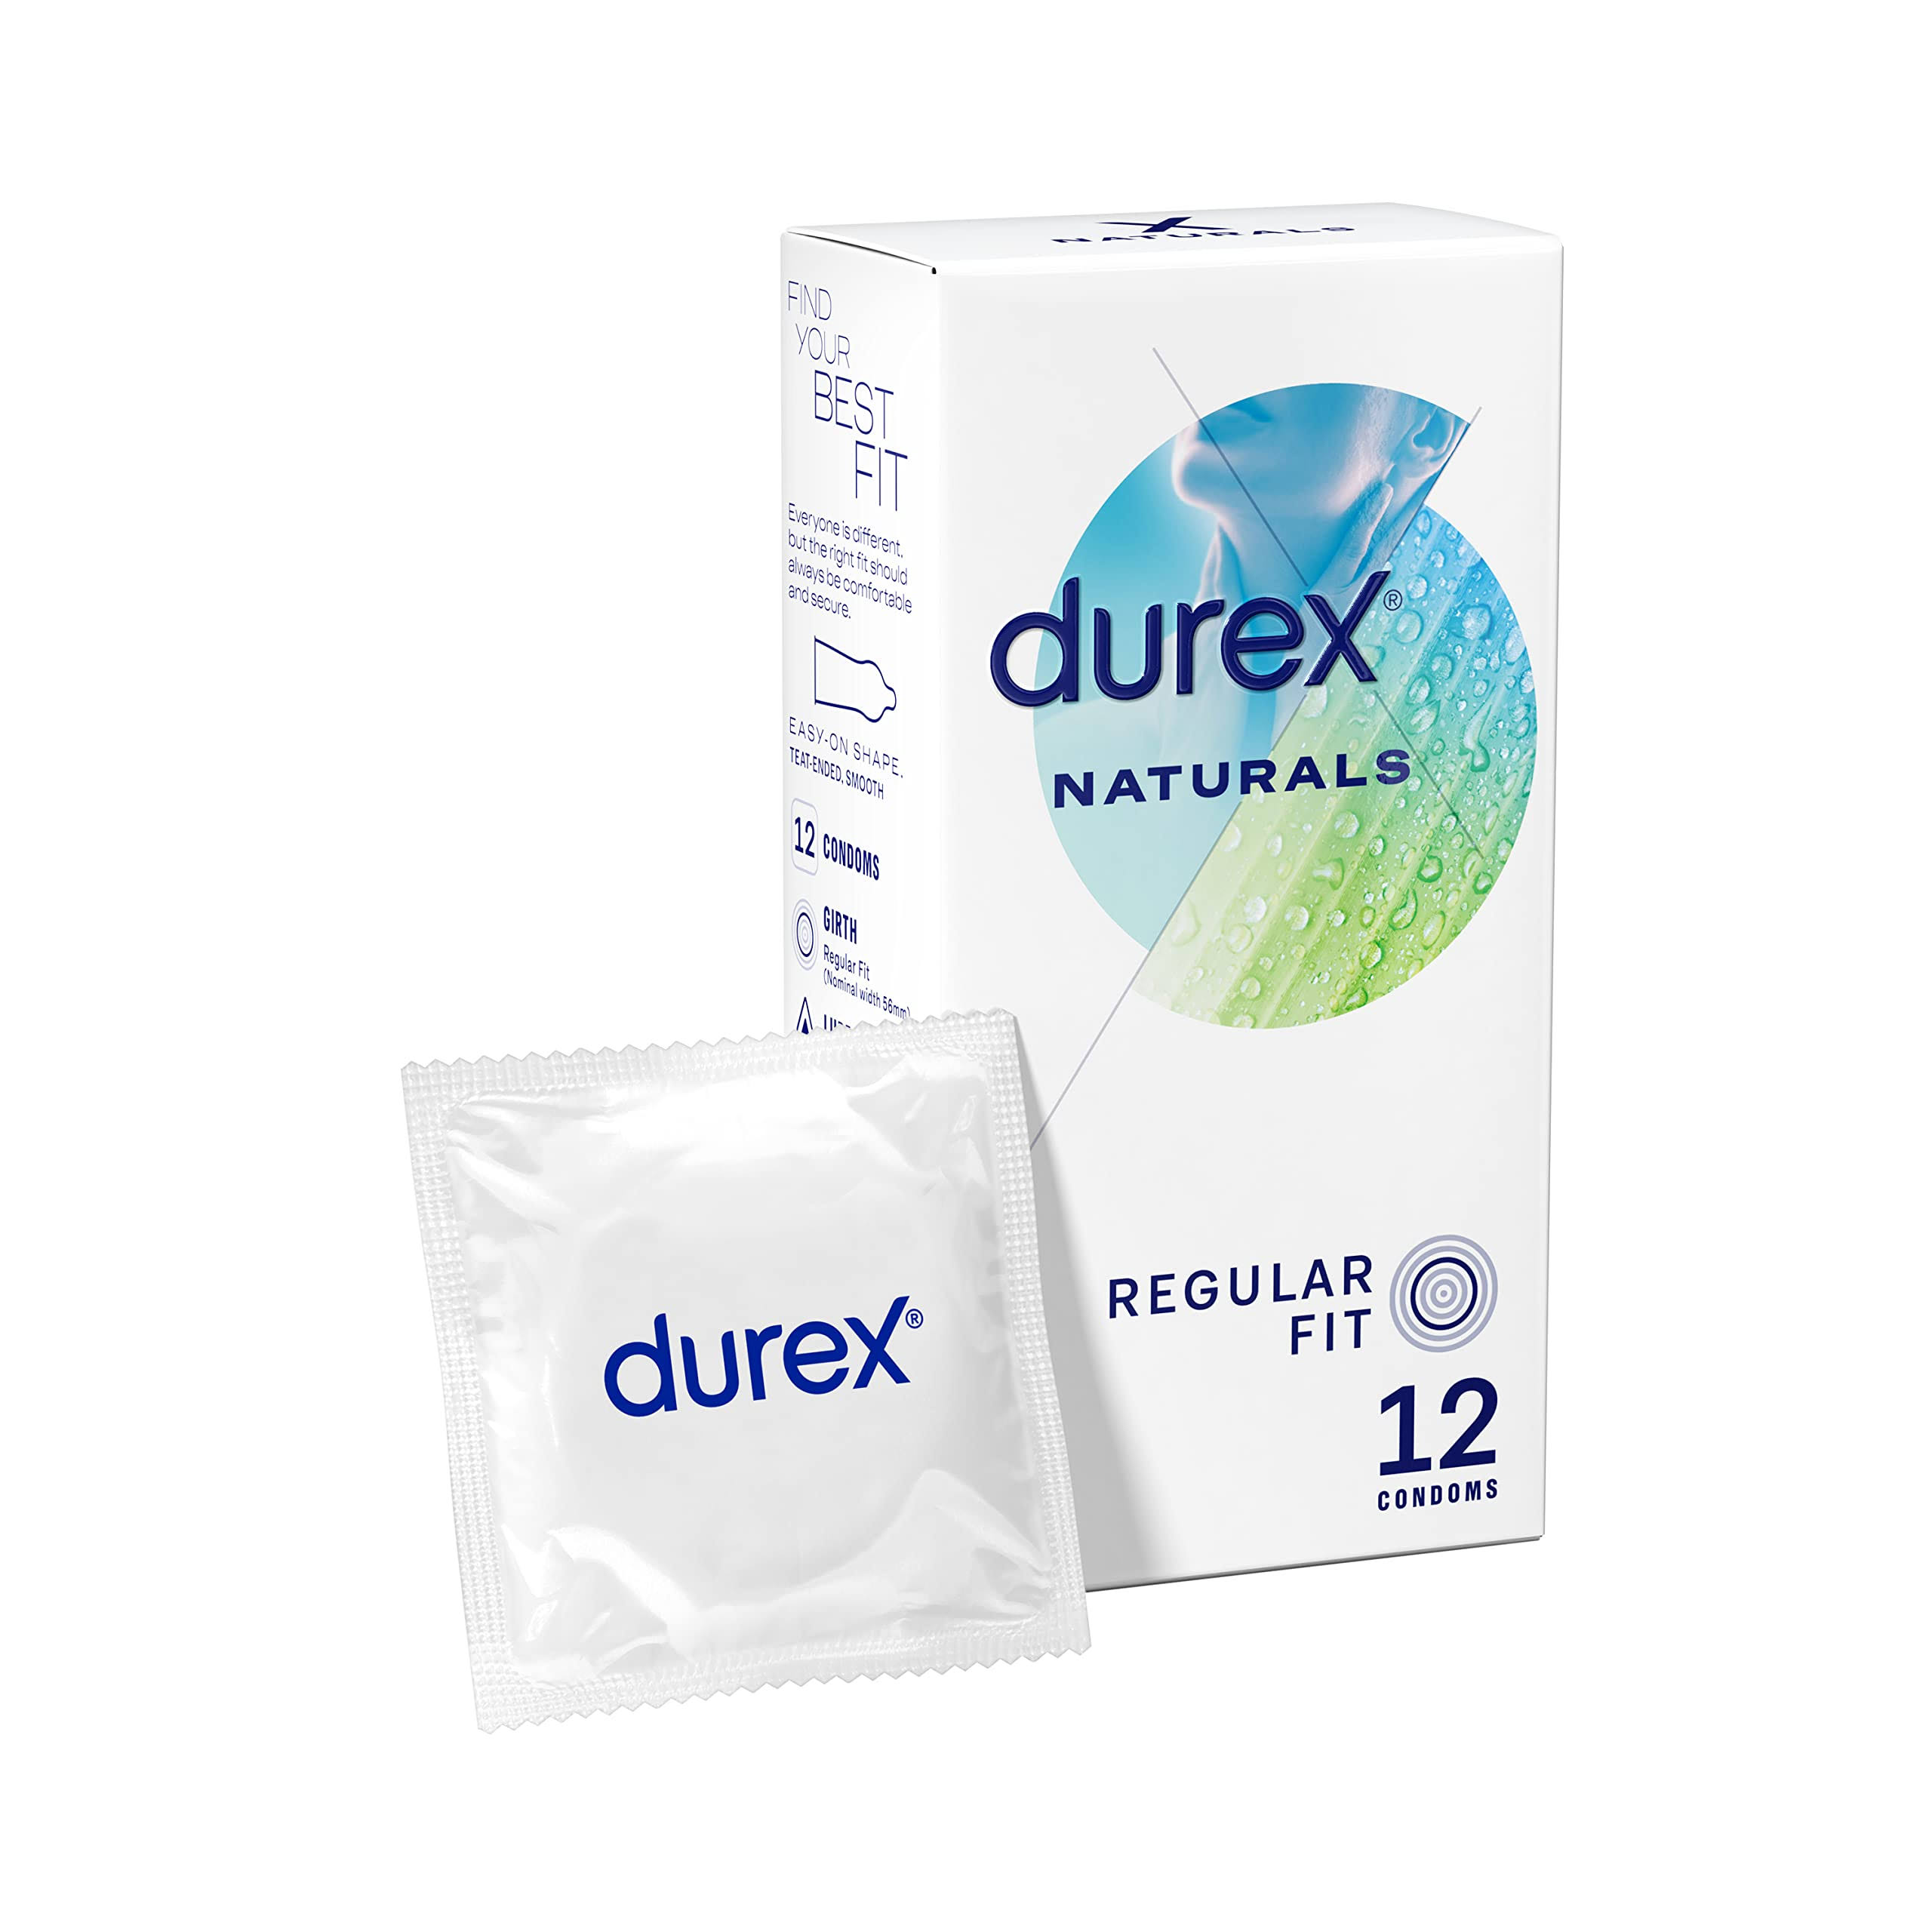 Durex Naturals Condoms (12)